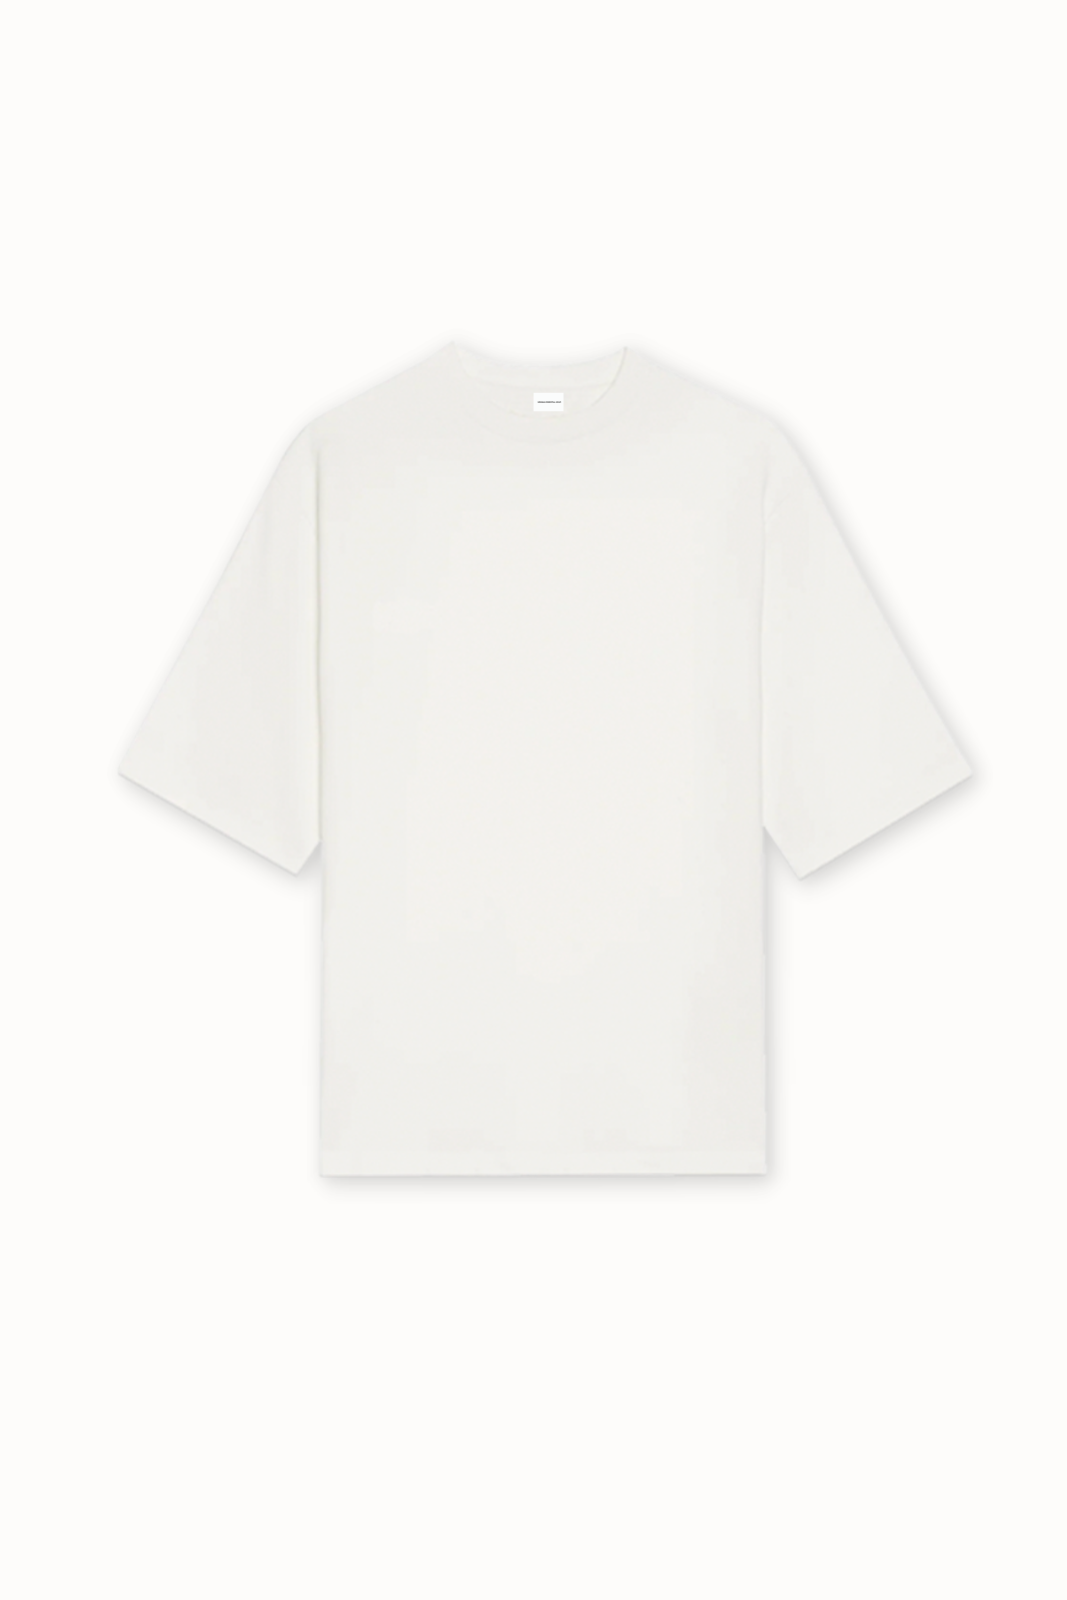 Plains Heavyweight T-Shirt White